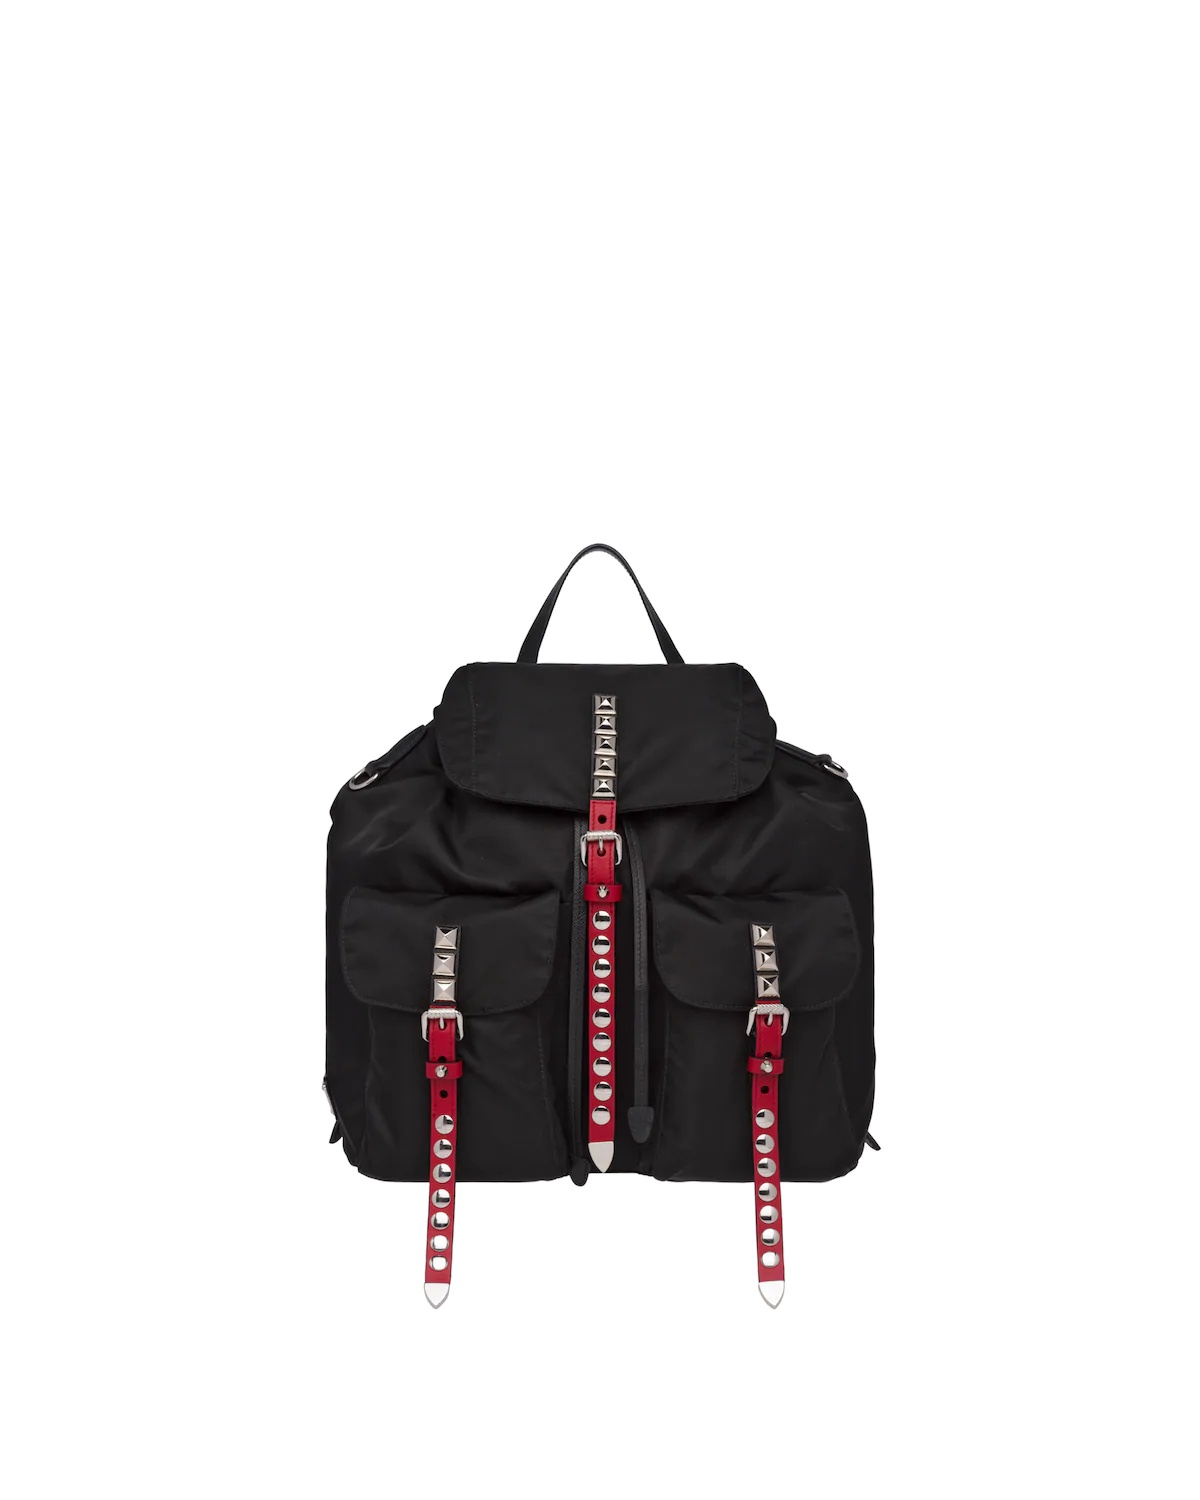 Prada Black Nylon Backpack - 1